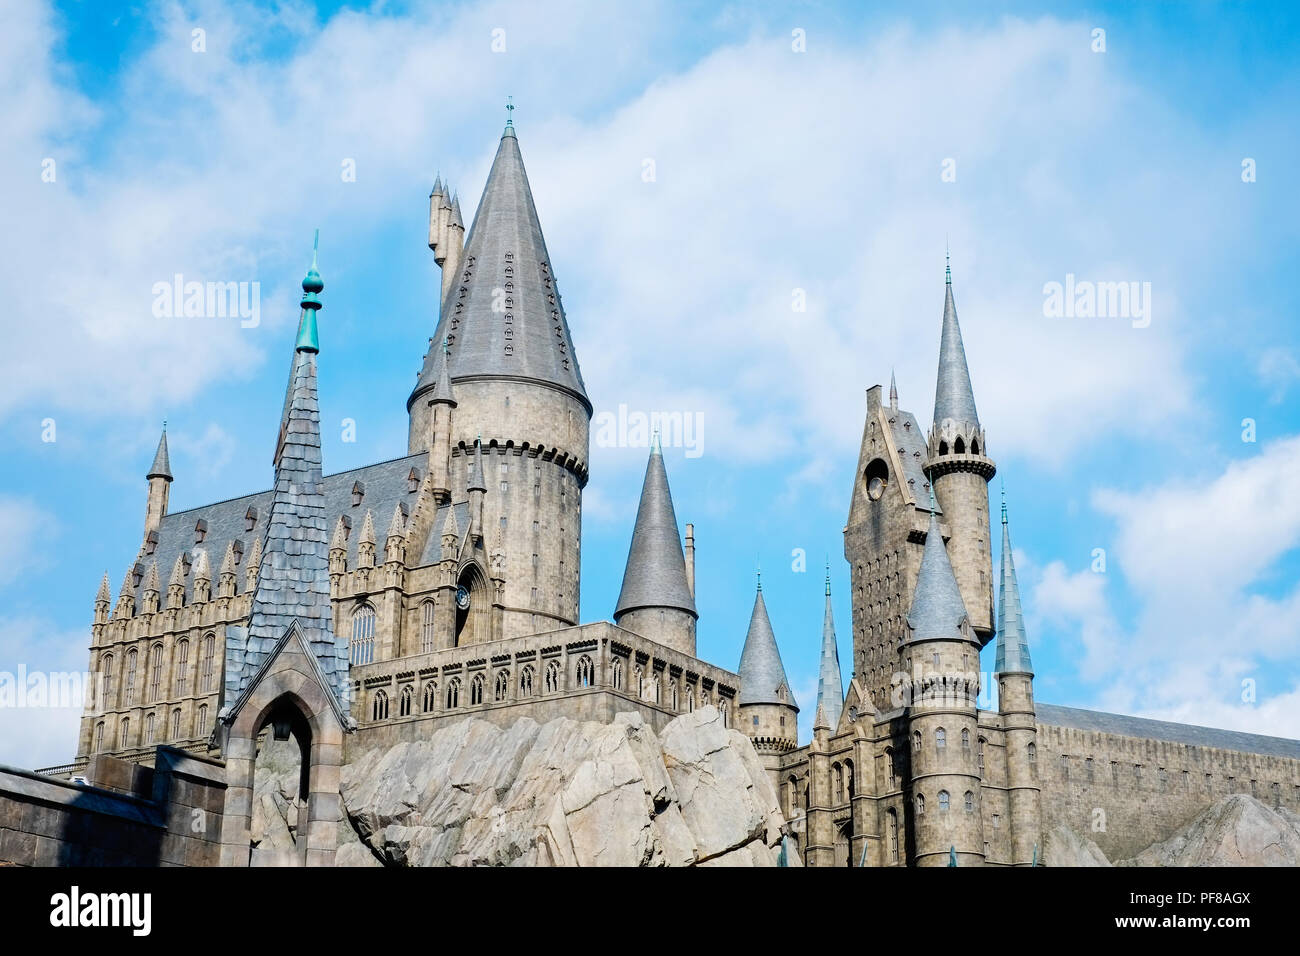 The Wizarding World Of Harry Potter The Medieval Castle In Universal Studios Japan Usj Osaka Japan Stock Photo Alamy